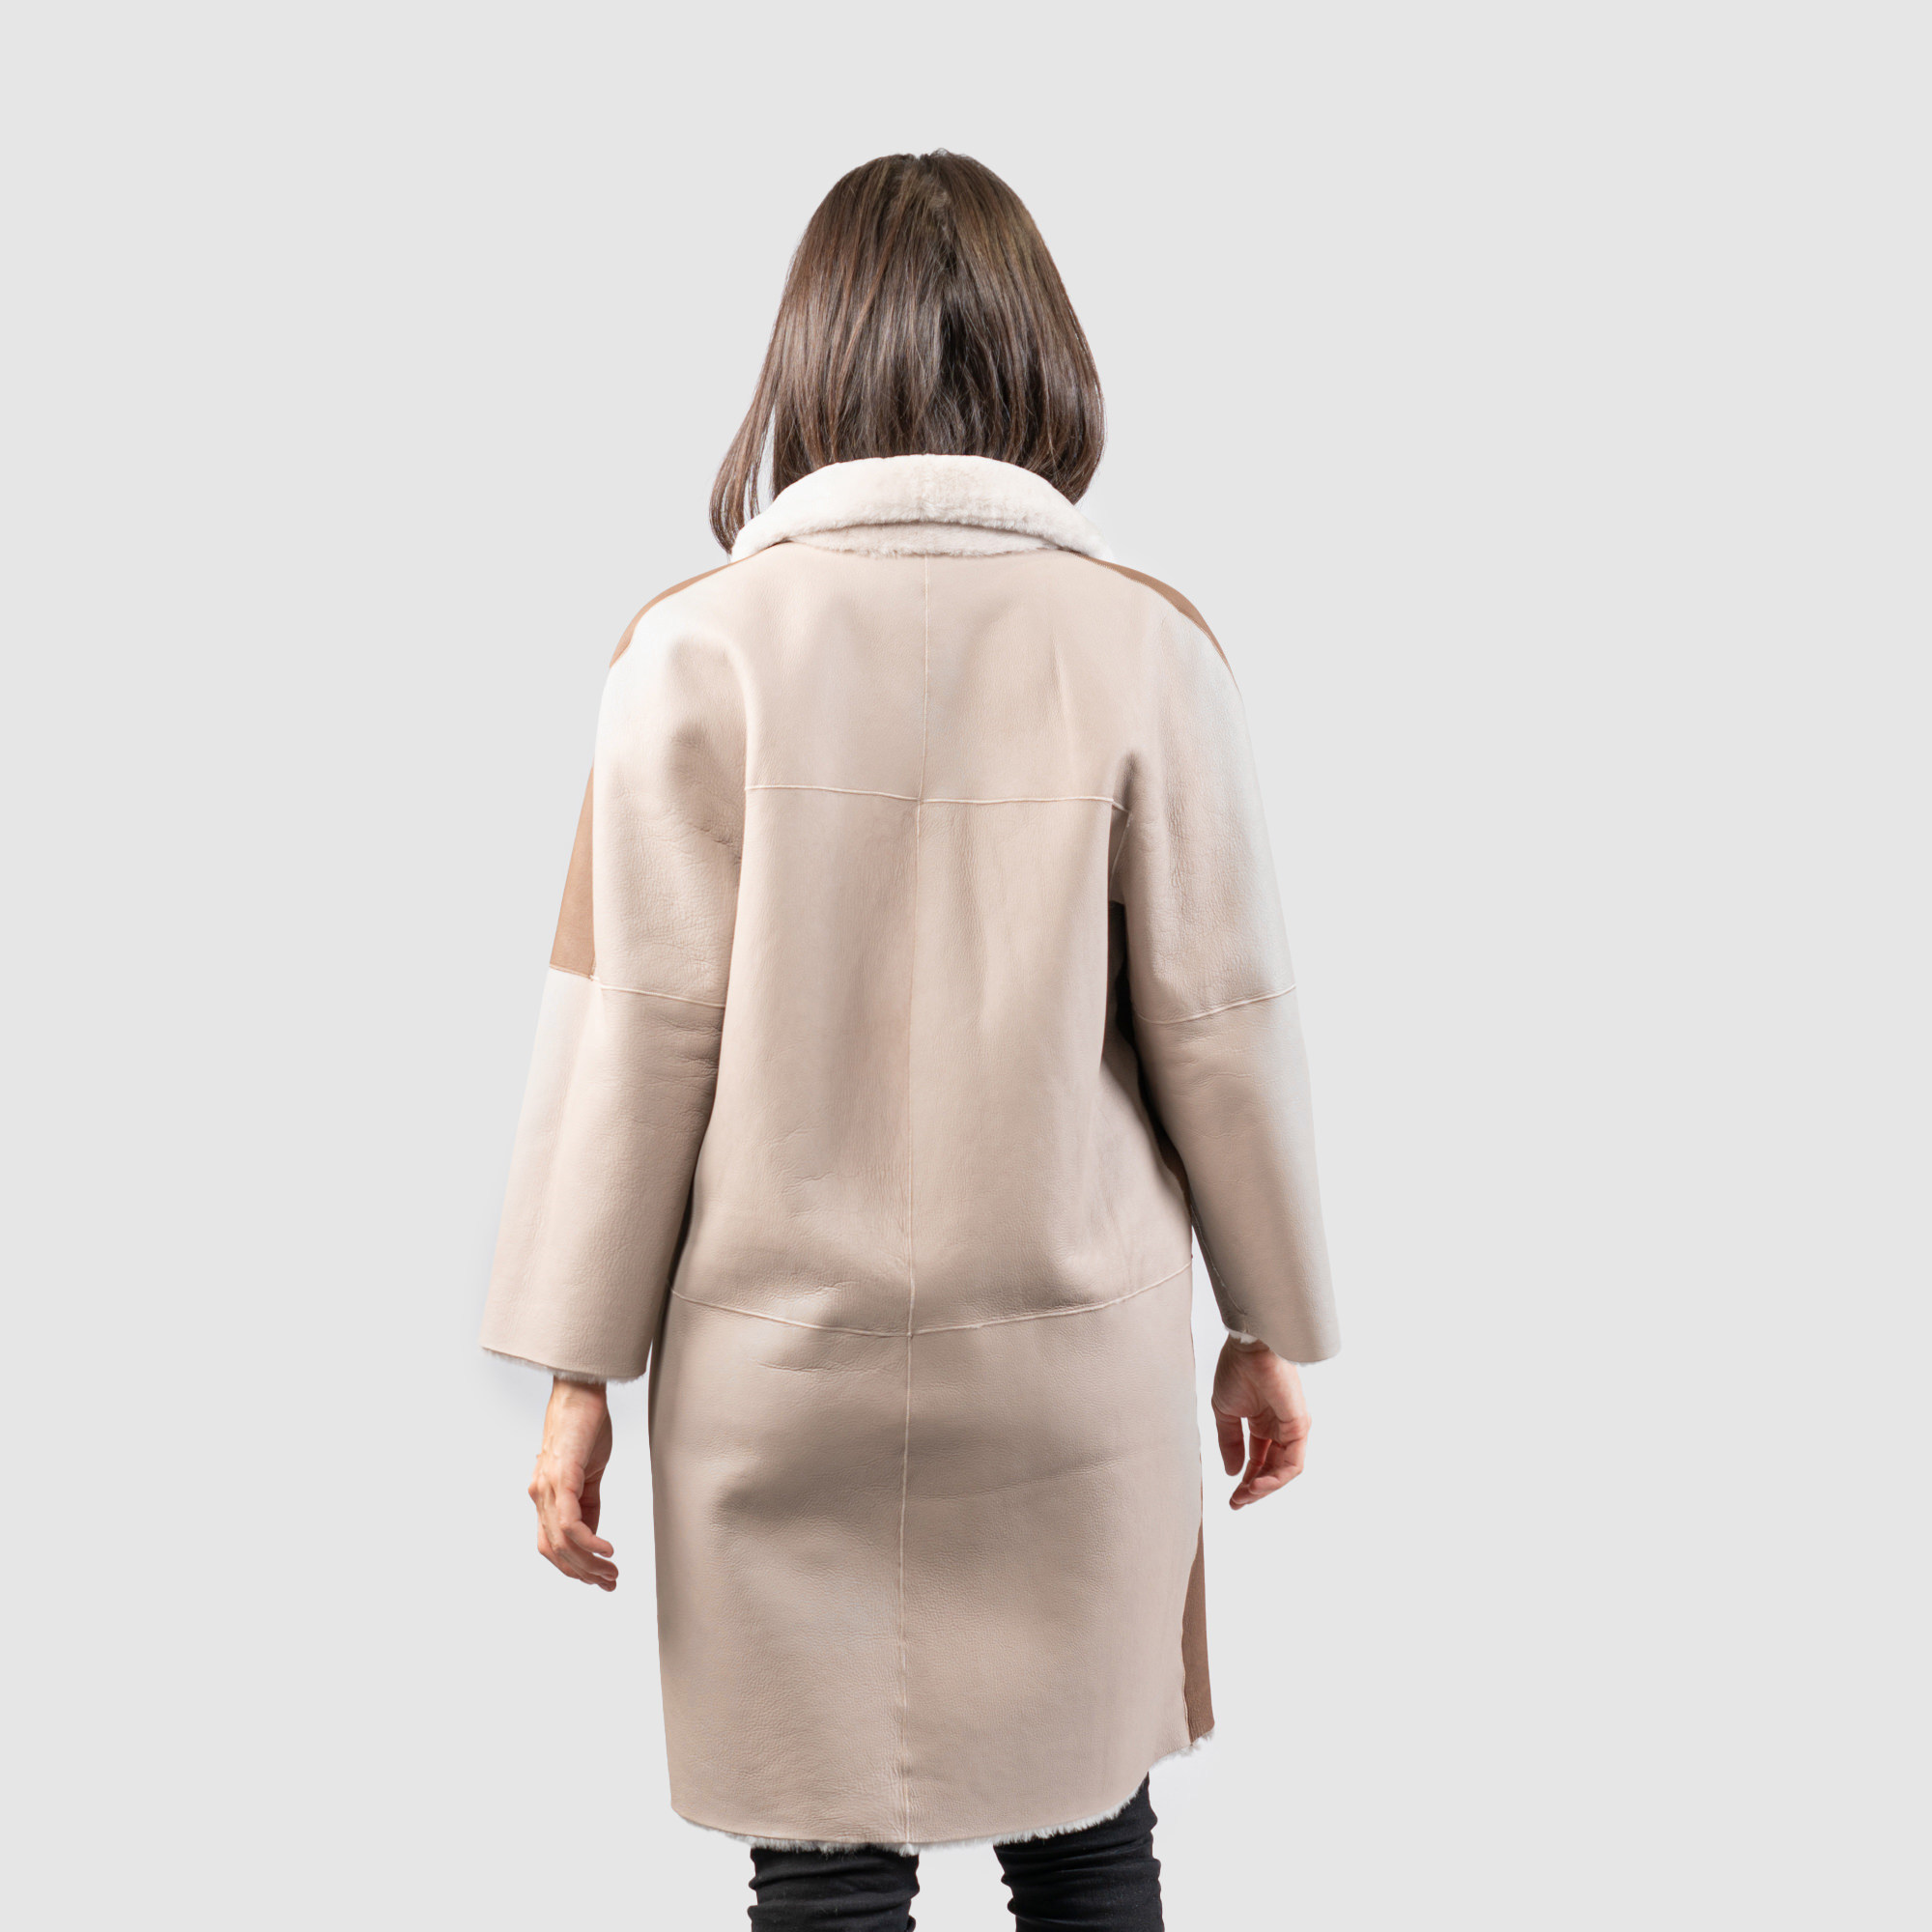 Reversible sheepskin jacket in brown shades